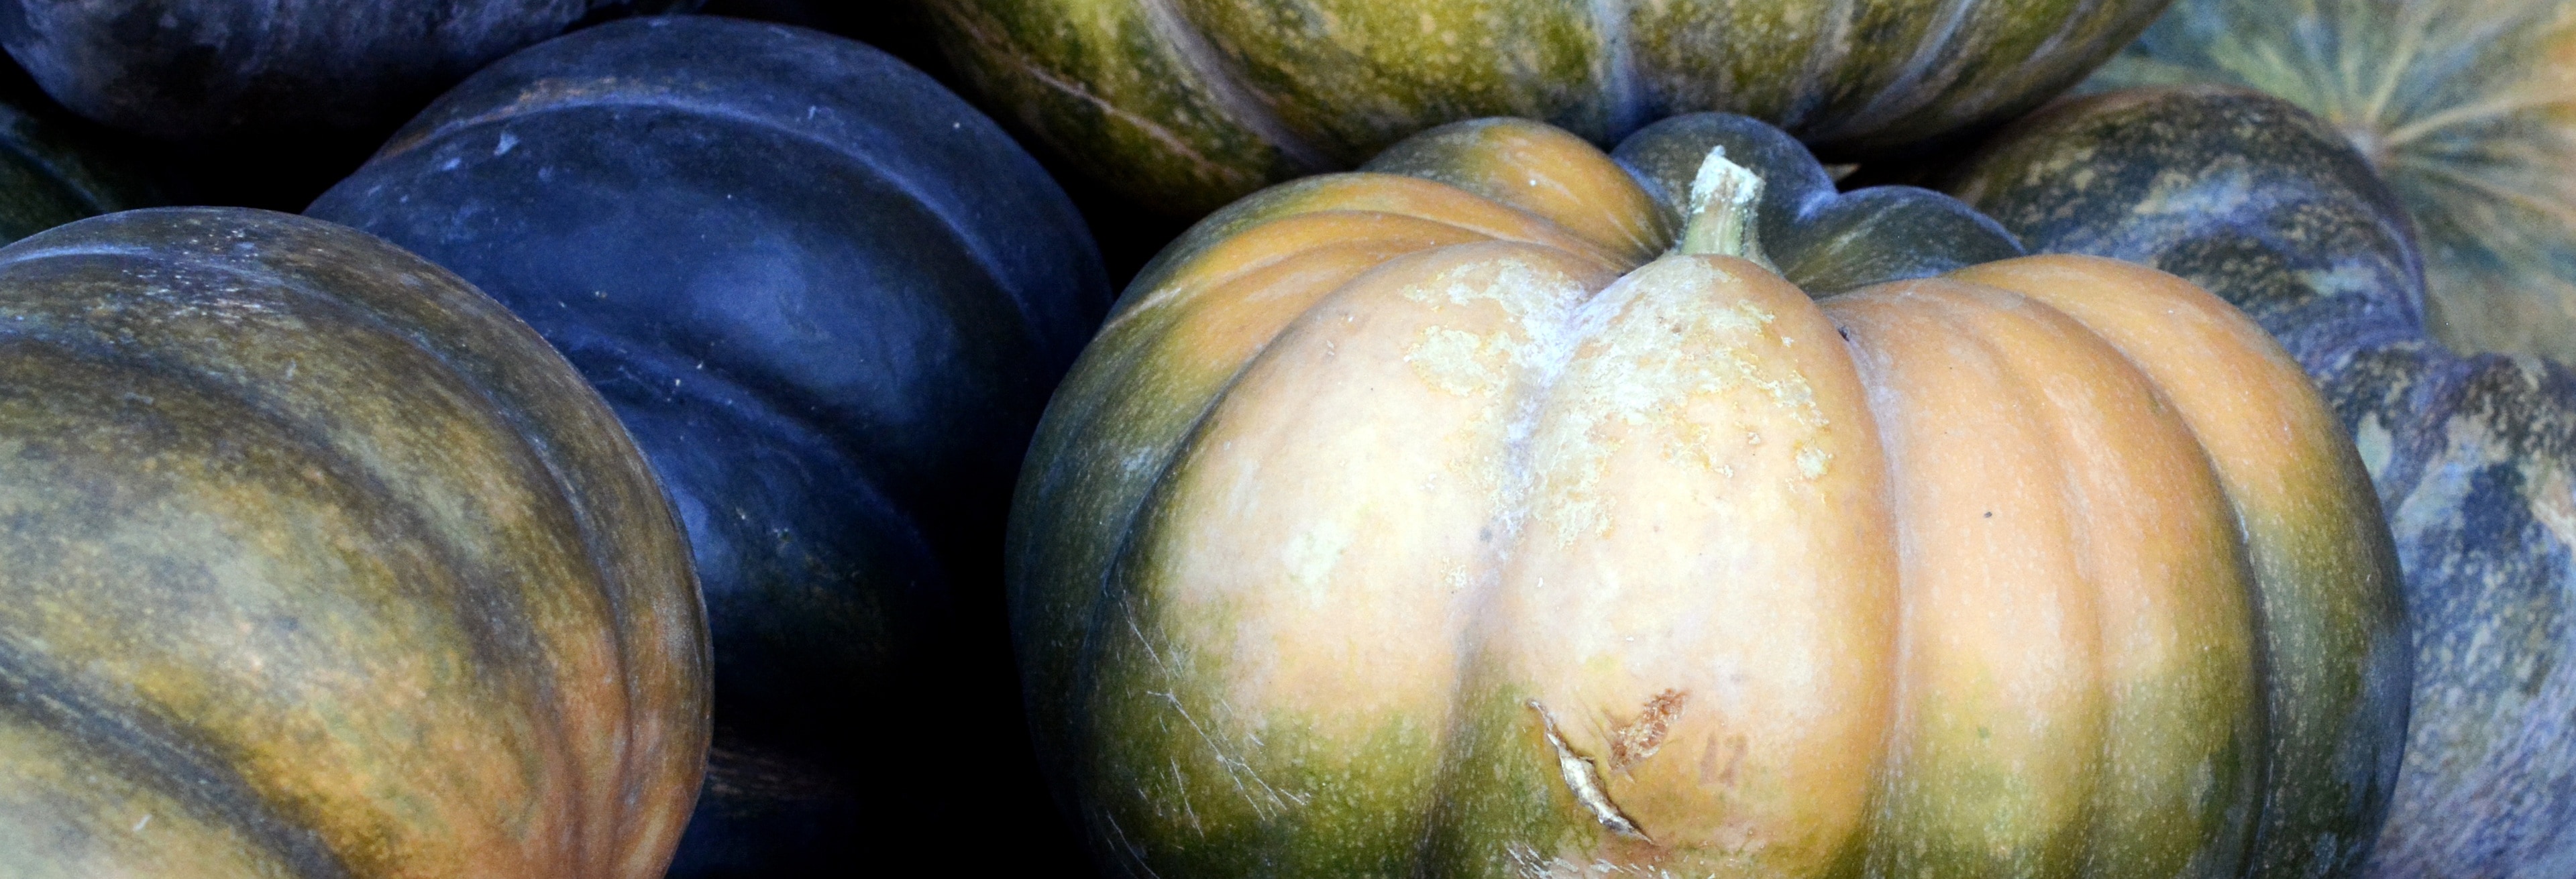 close up photo of squash vegetable